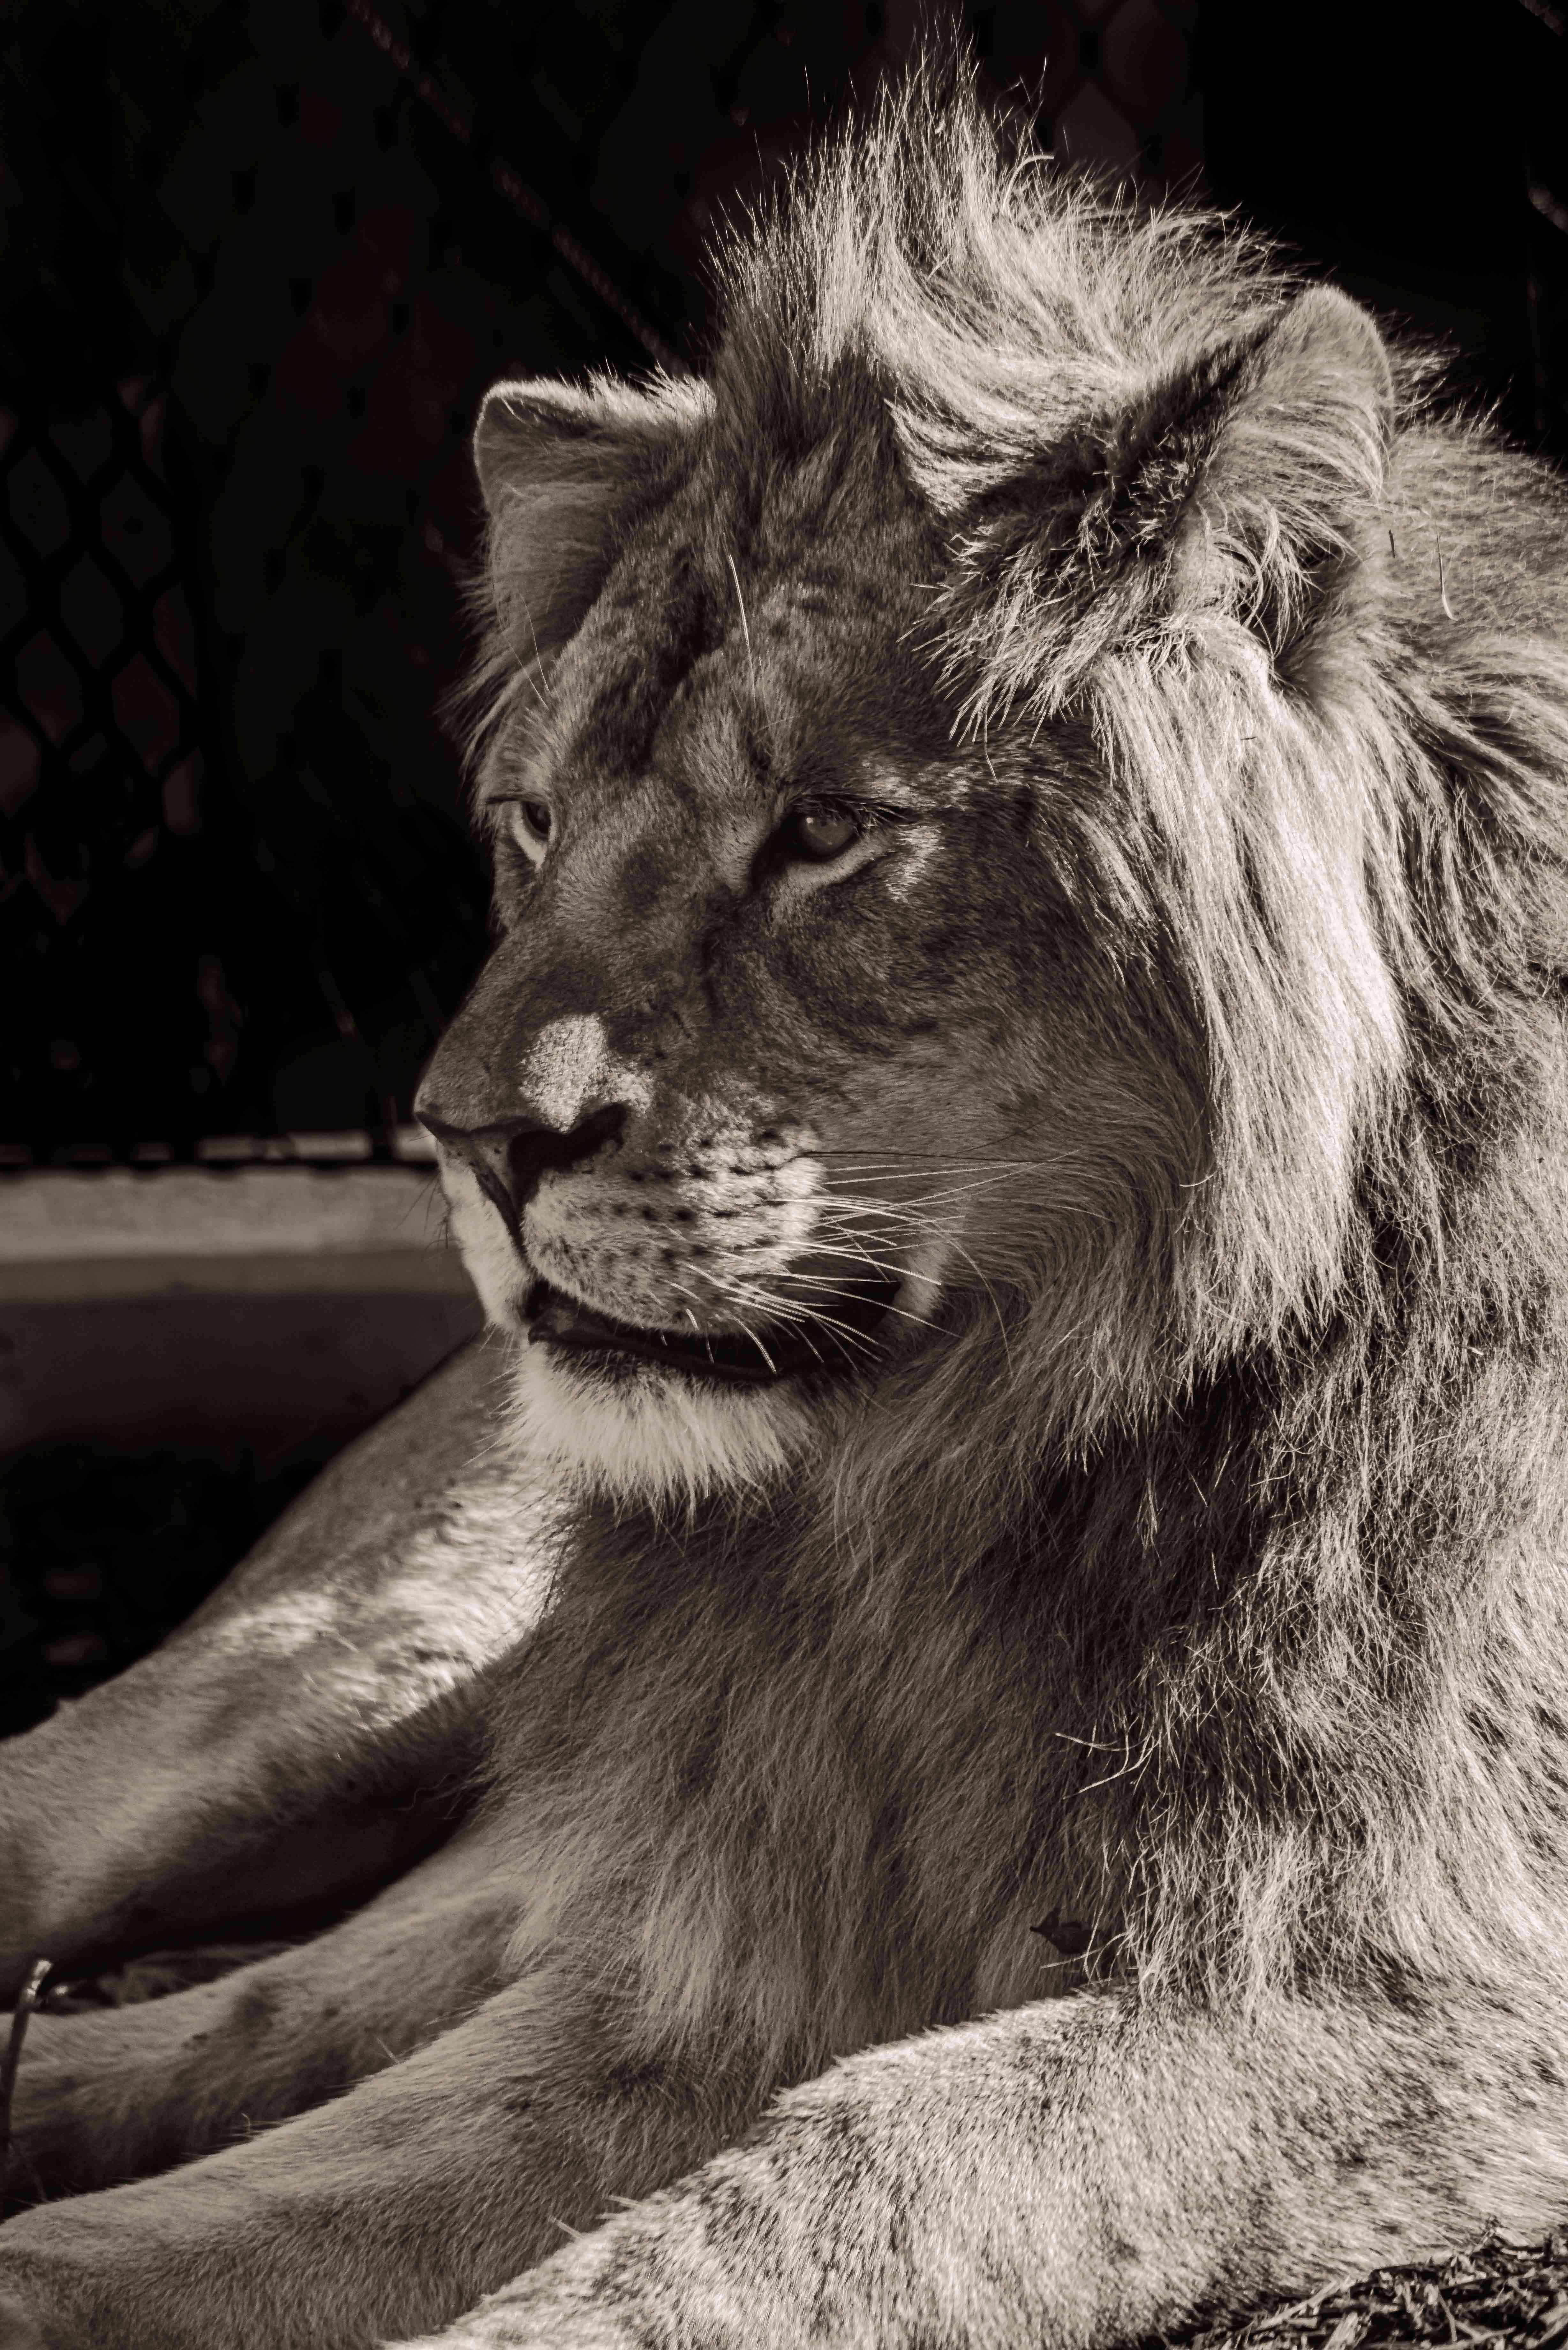 SEMD231 - DSC_7701 Sepia - 
African Savannah Lion, Taronga Zoo,  Sydney, NSW, Australia.
1st July 2020 - 2.43pm
Camera - Nikon D800 
F8 - ISO 800 - 1/640 second - Focal Length 300mm